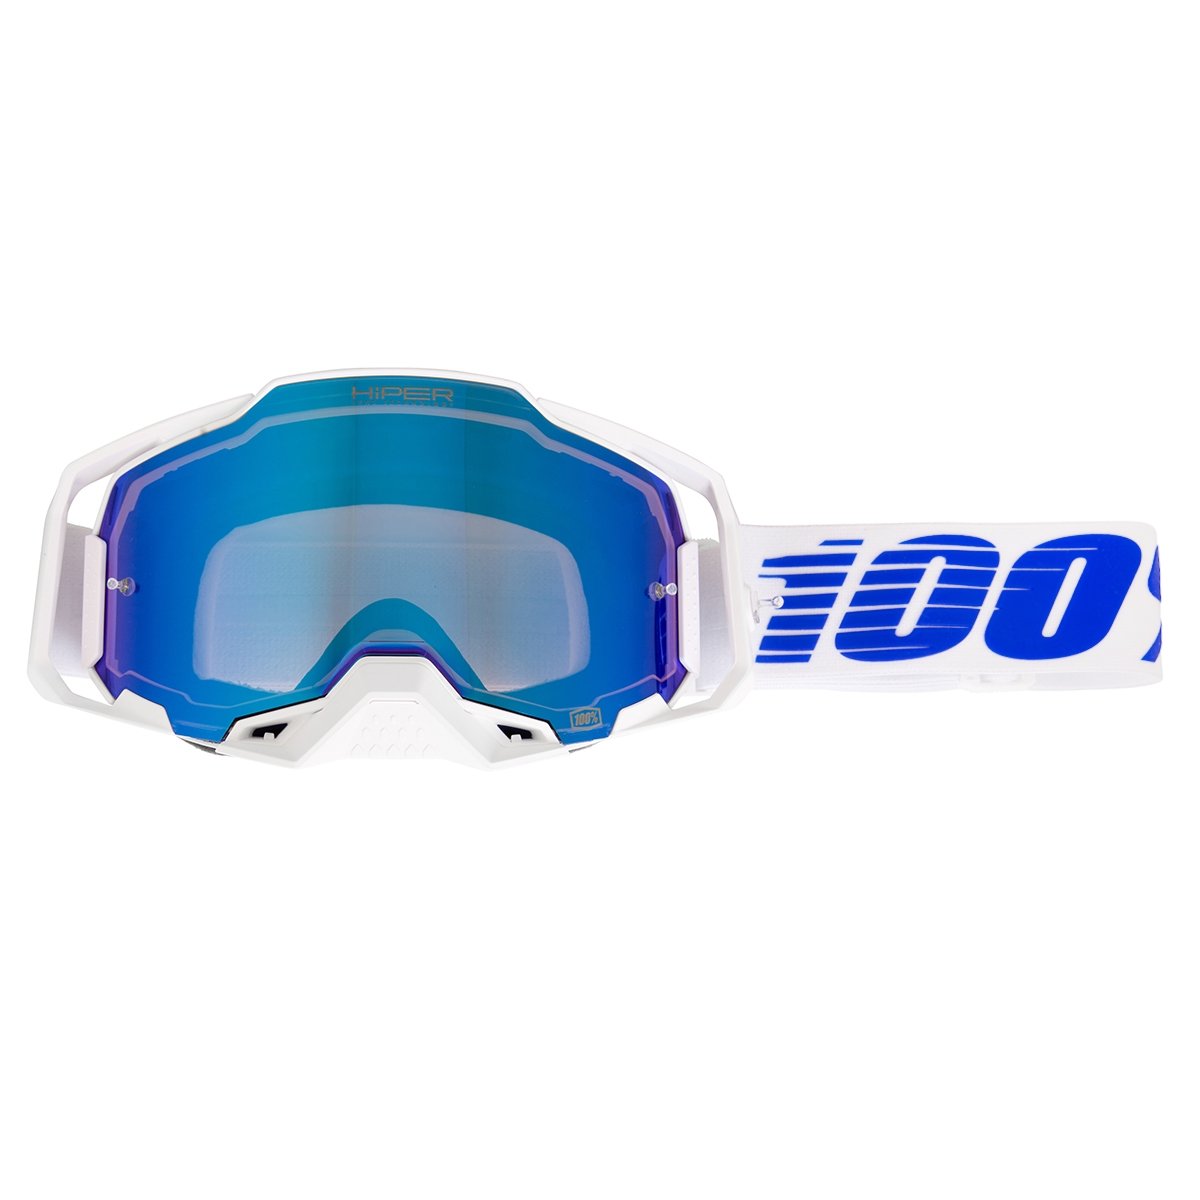 100% Crossbrille Armega Izi - Hiper Blau verspiegelt, Anti Fog